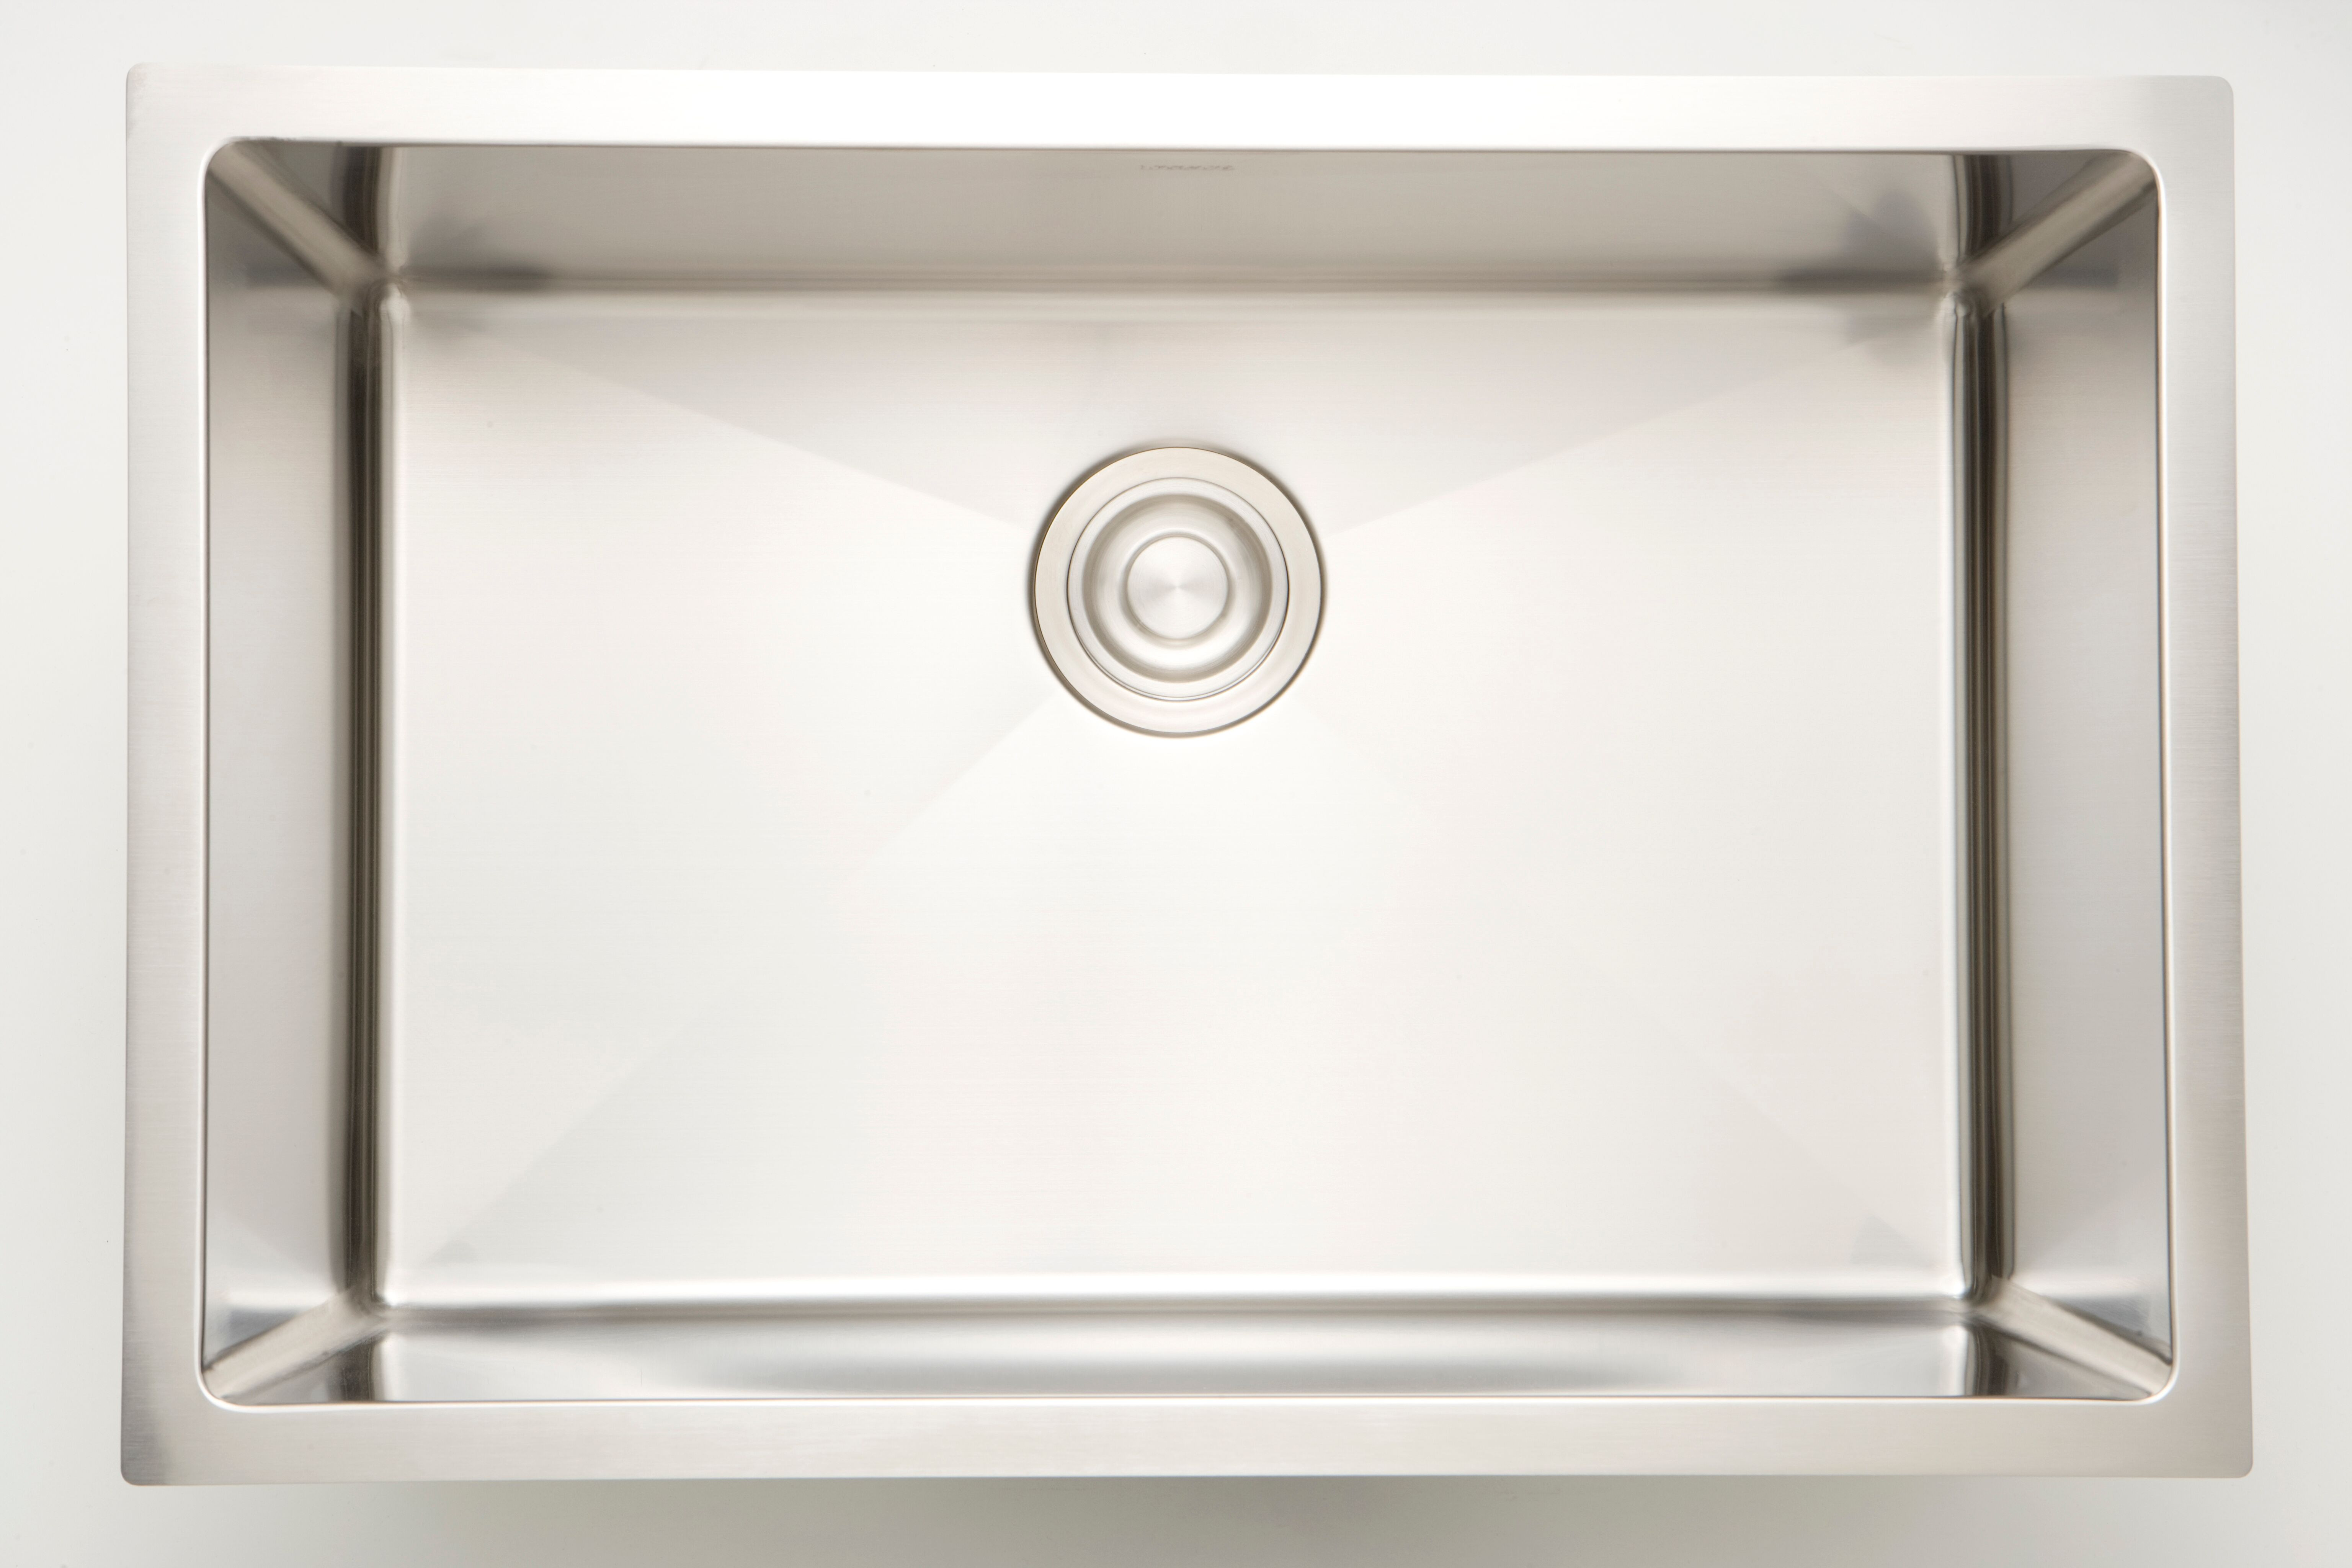 American Imagination AI-27411 Undermount Single Bowl Kitchen Sink In Chrome